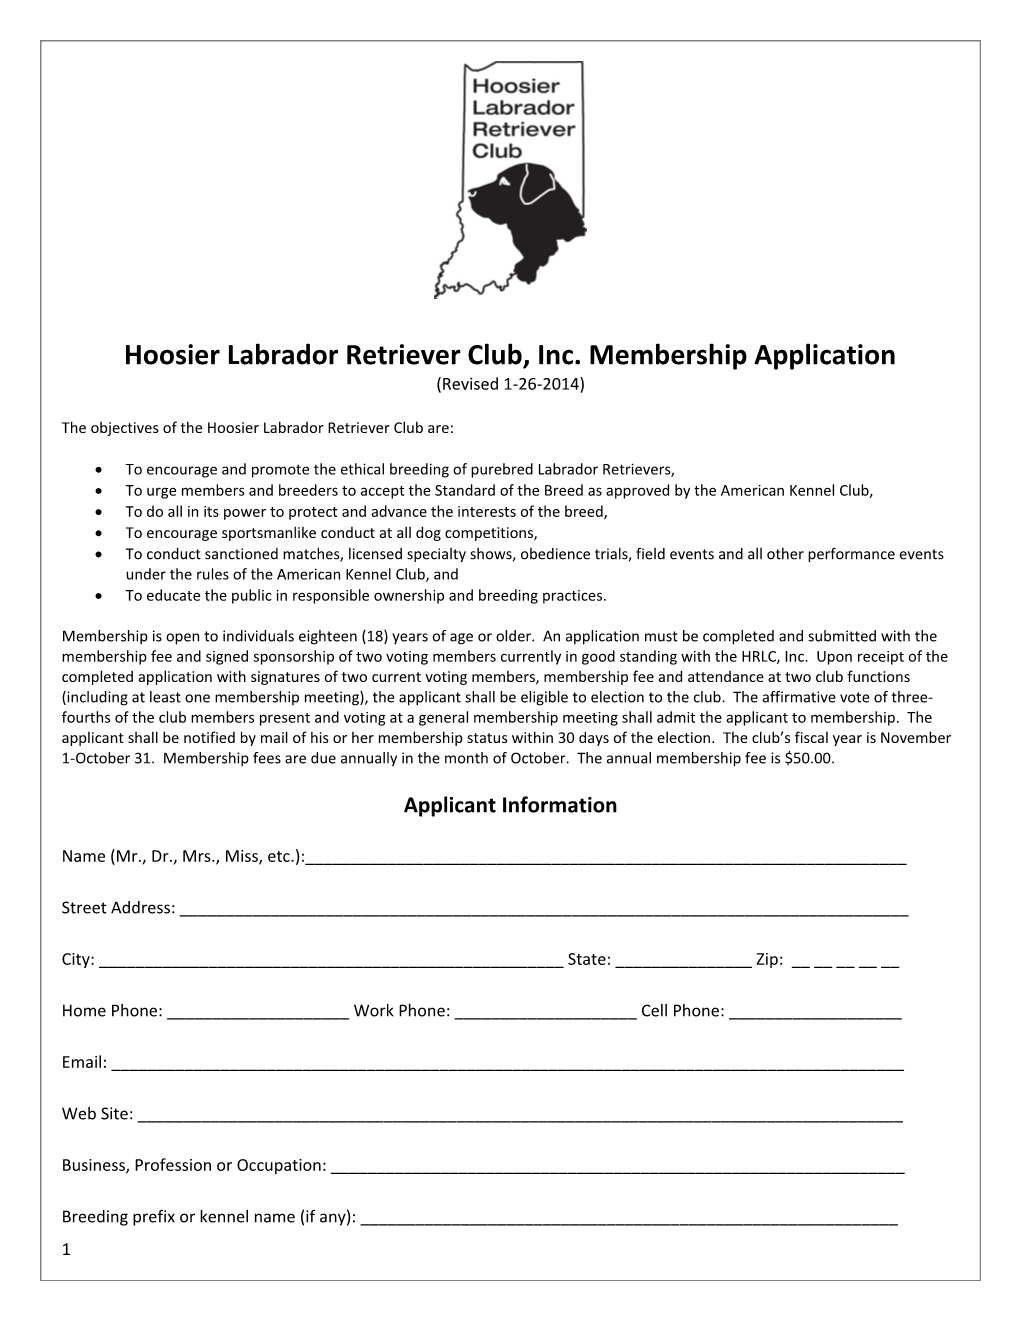 Hoosier Labrador Retriever Club, Inc. Membership Application